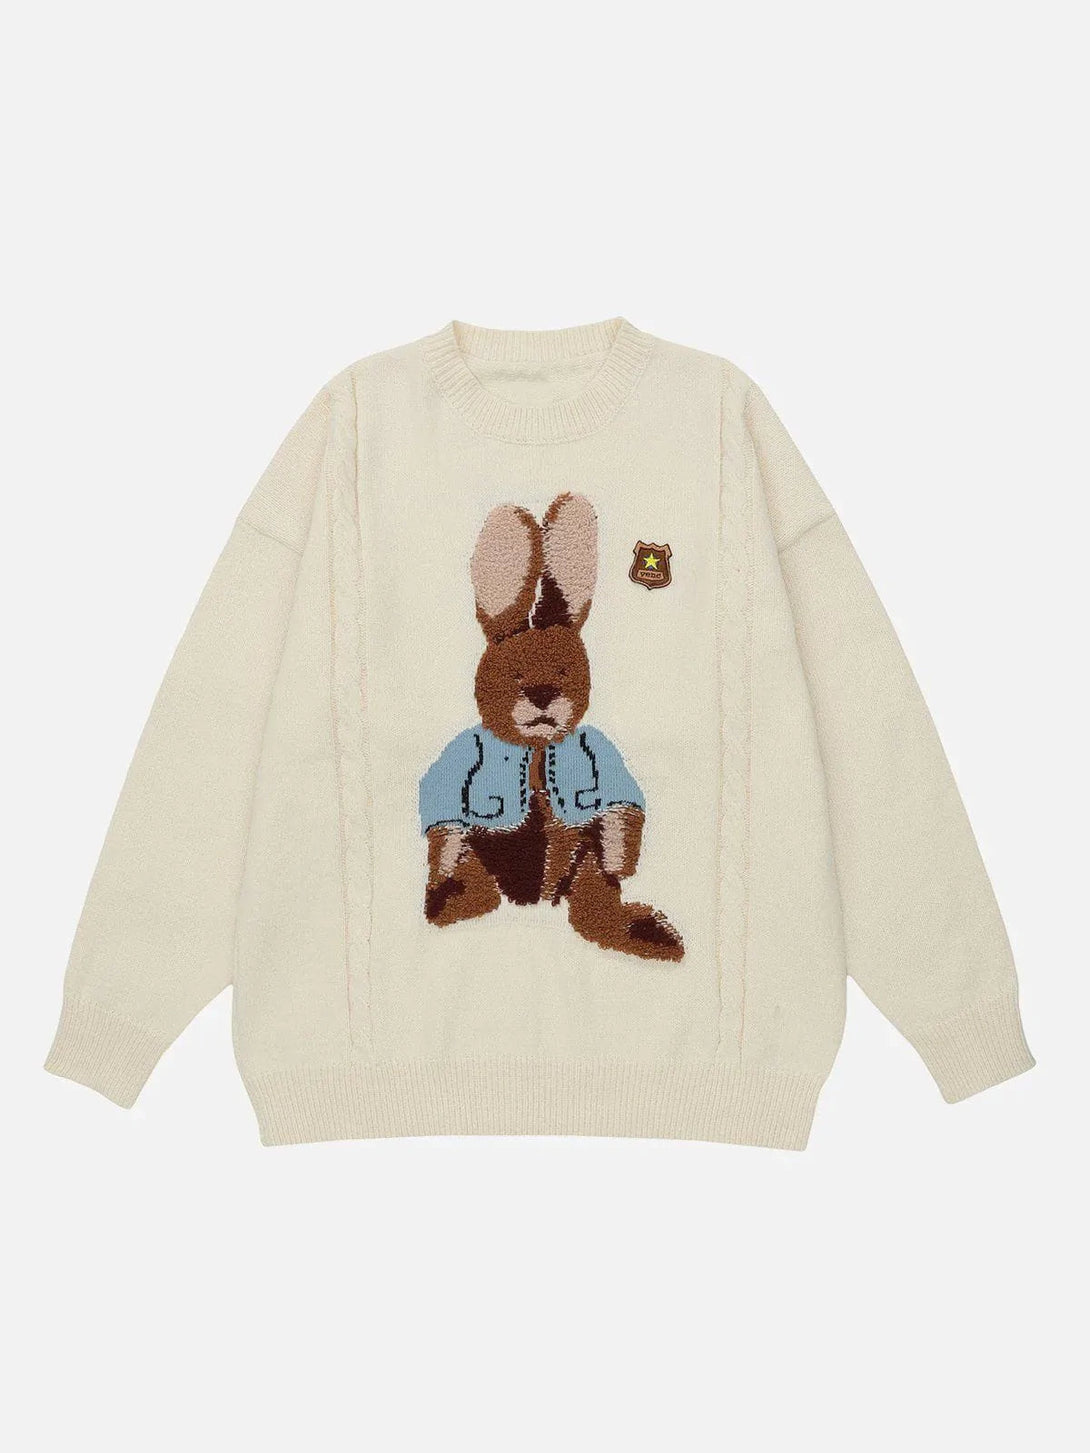 Majesda® - Rabbit Flock Panel Sweater outfit ideas streetwear fashion